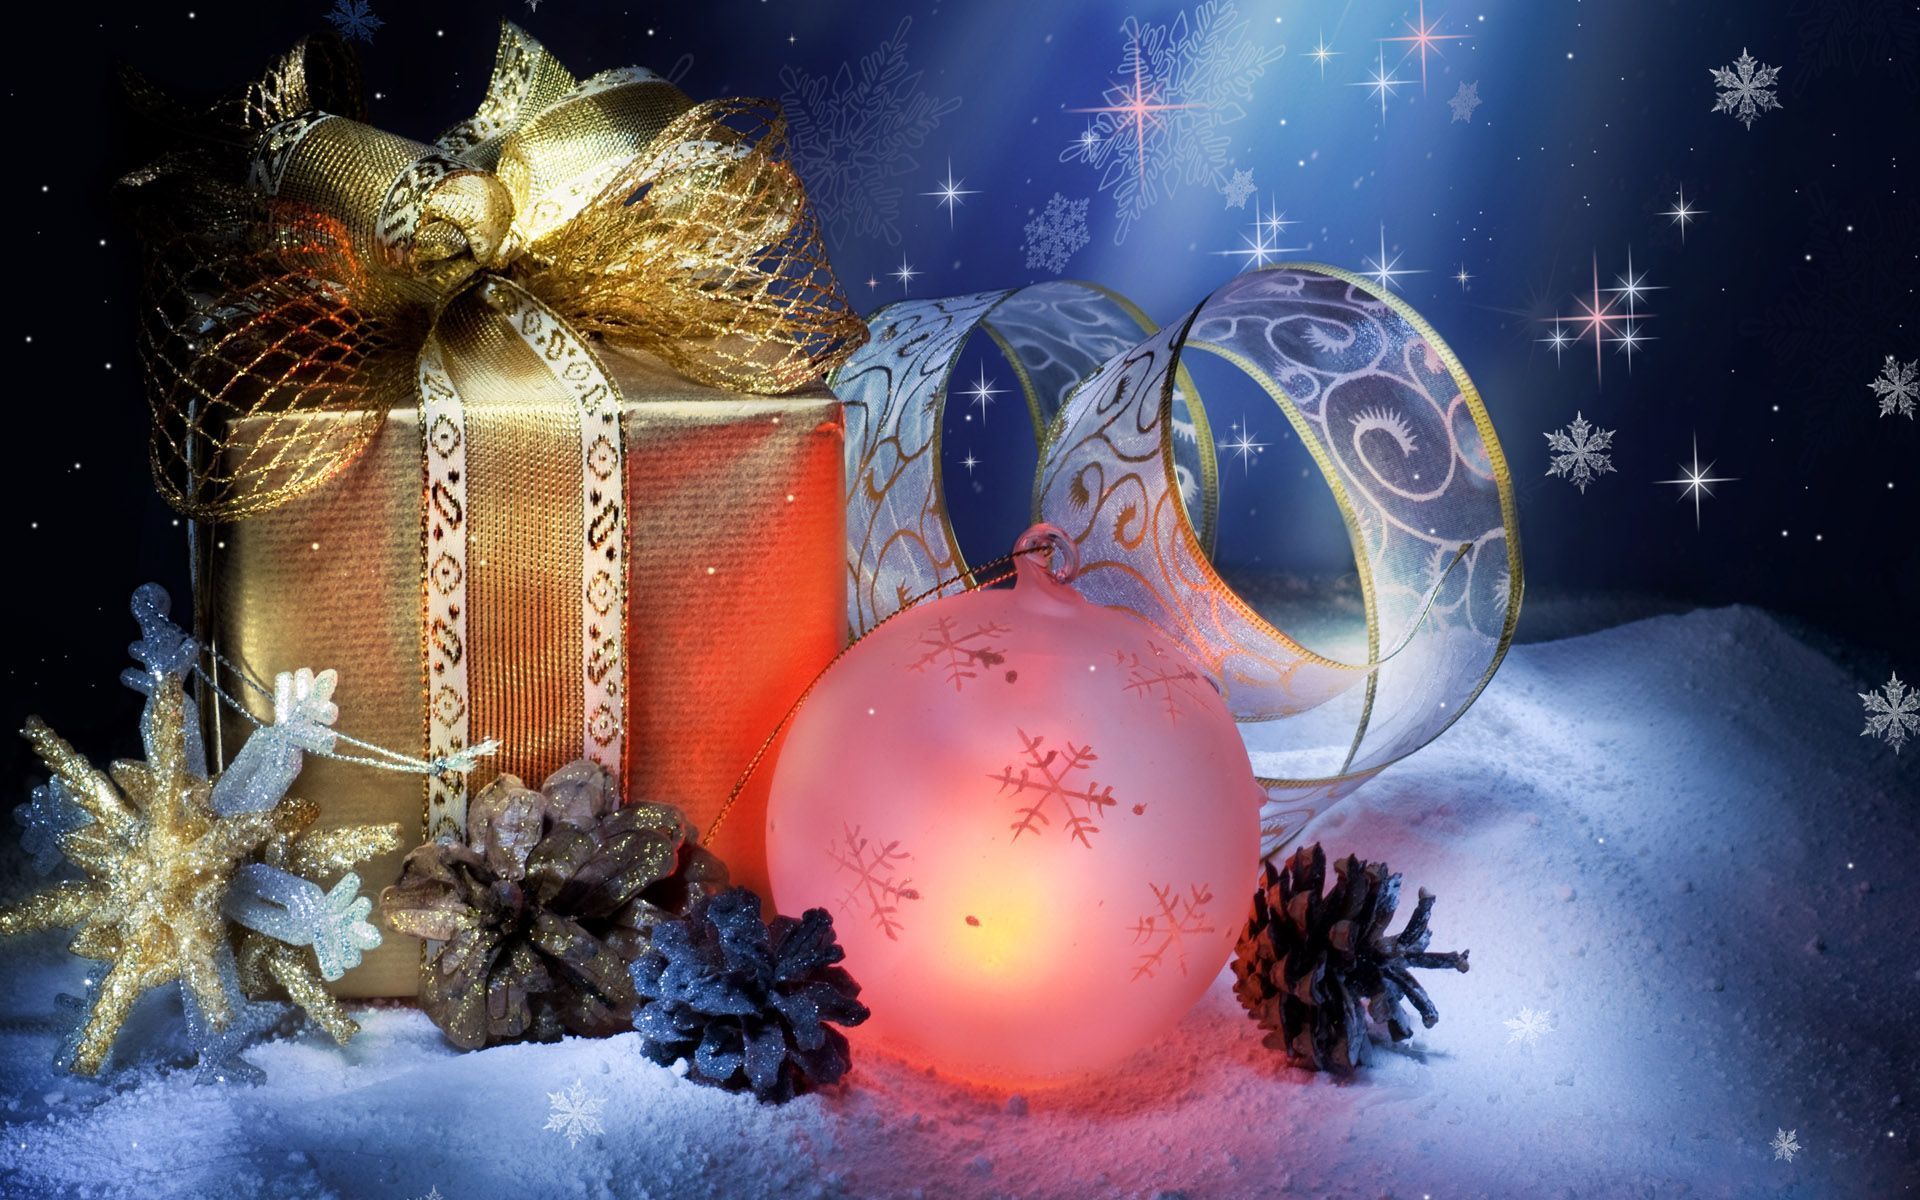 free Christmas desktop wallpaper - images, pics, photos, pictures |